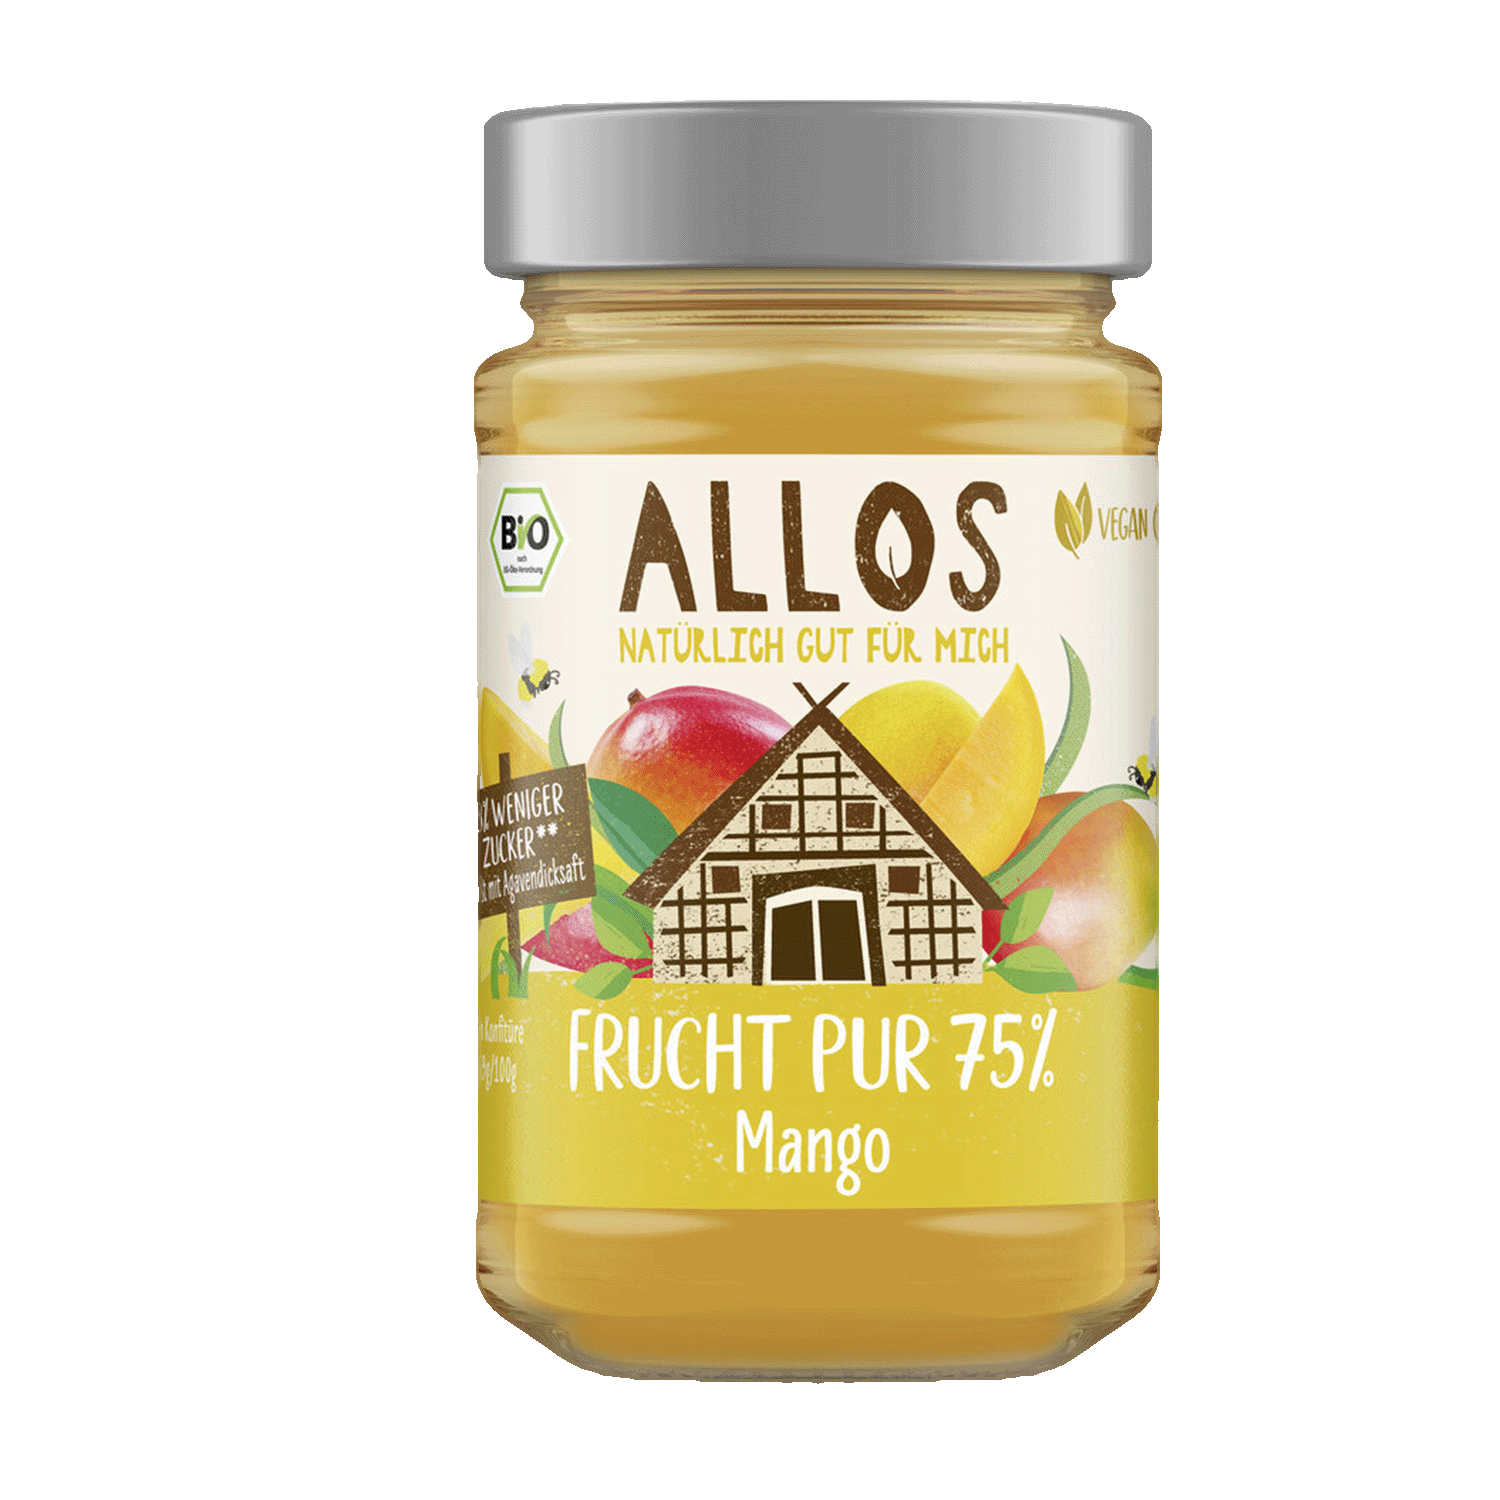 Frucht Pur 75% Mango, BIO, 250g